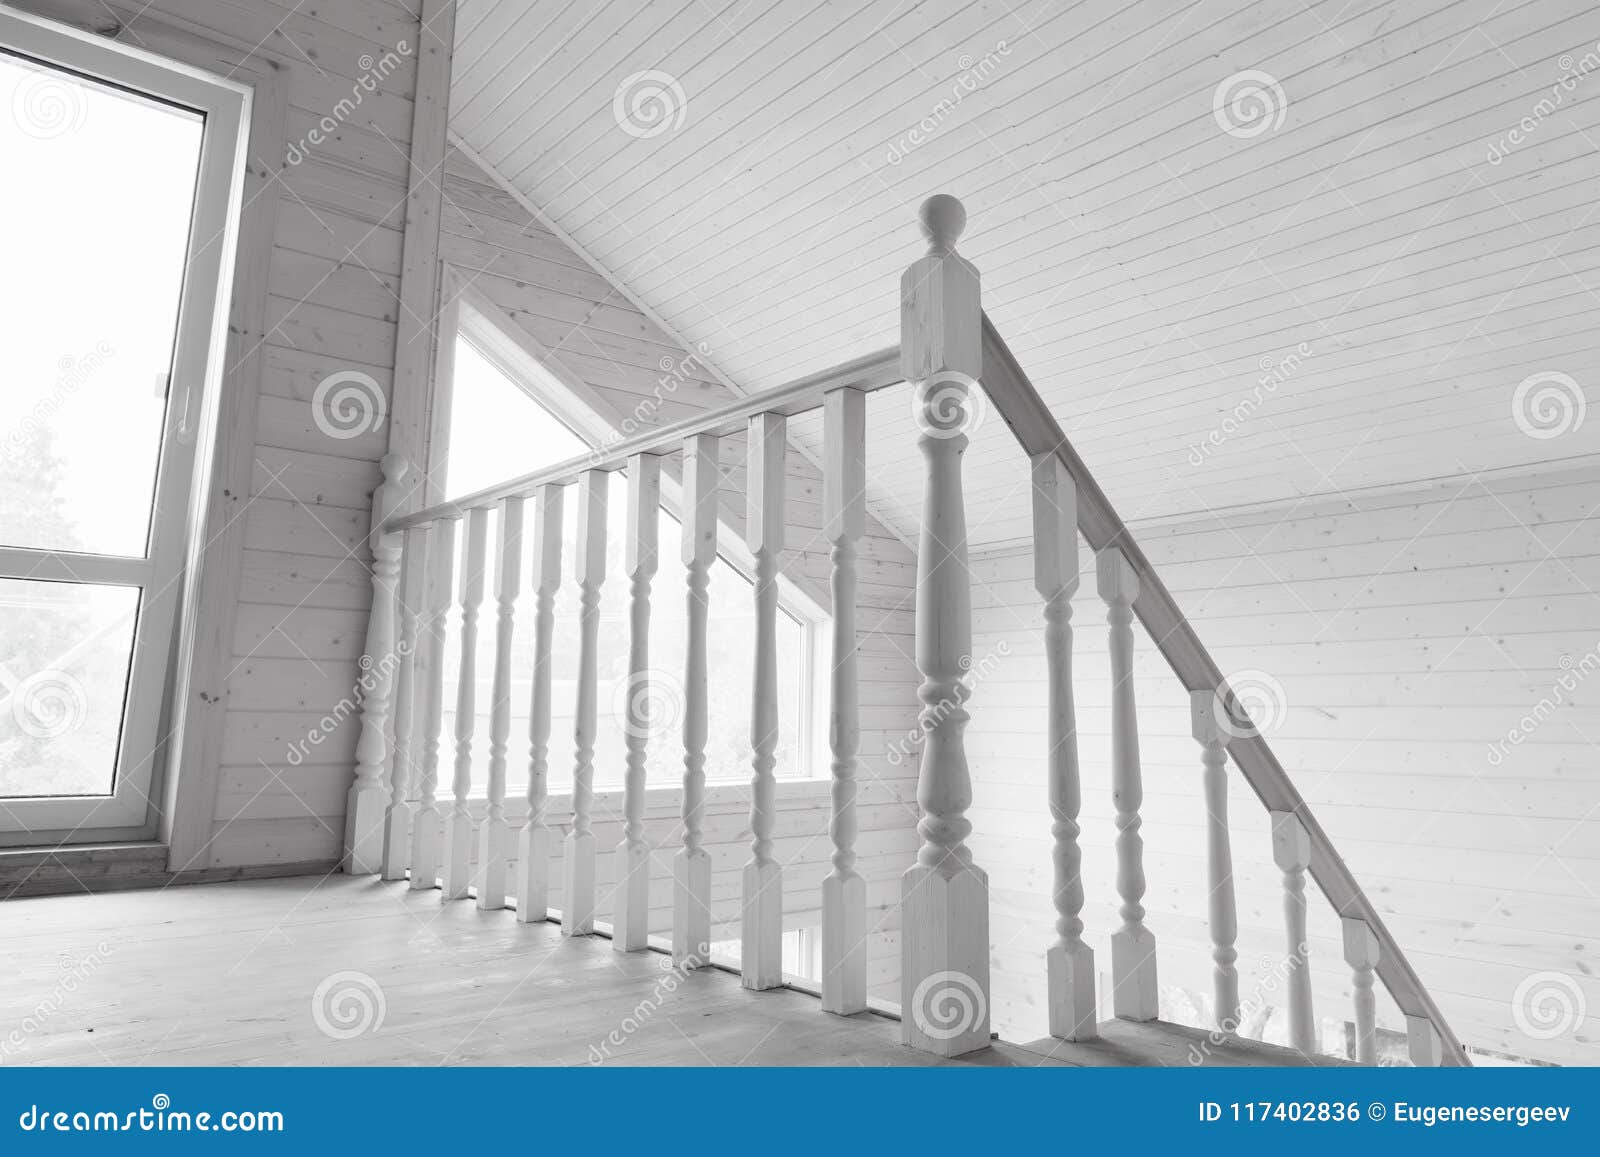 White Balcony Railings New Wooden House Stock Photo Image